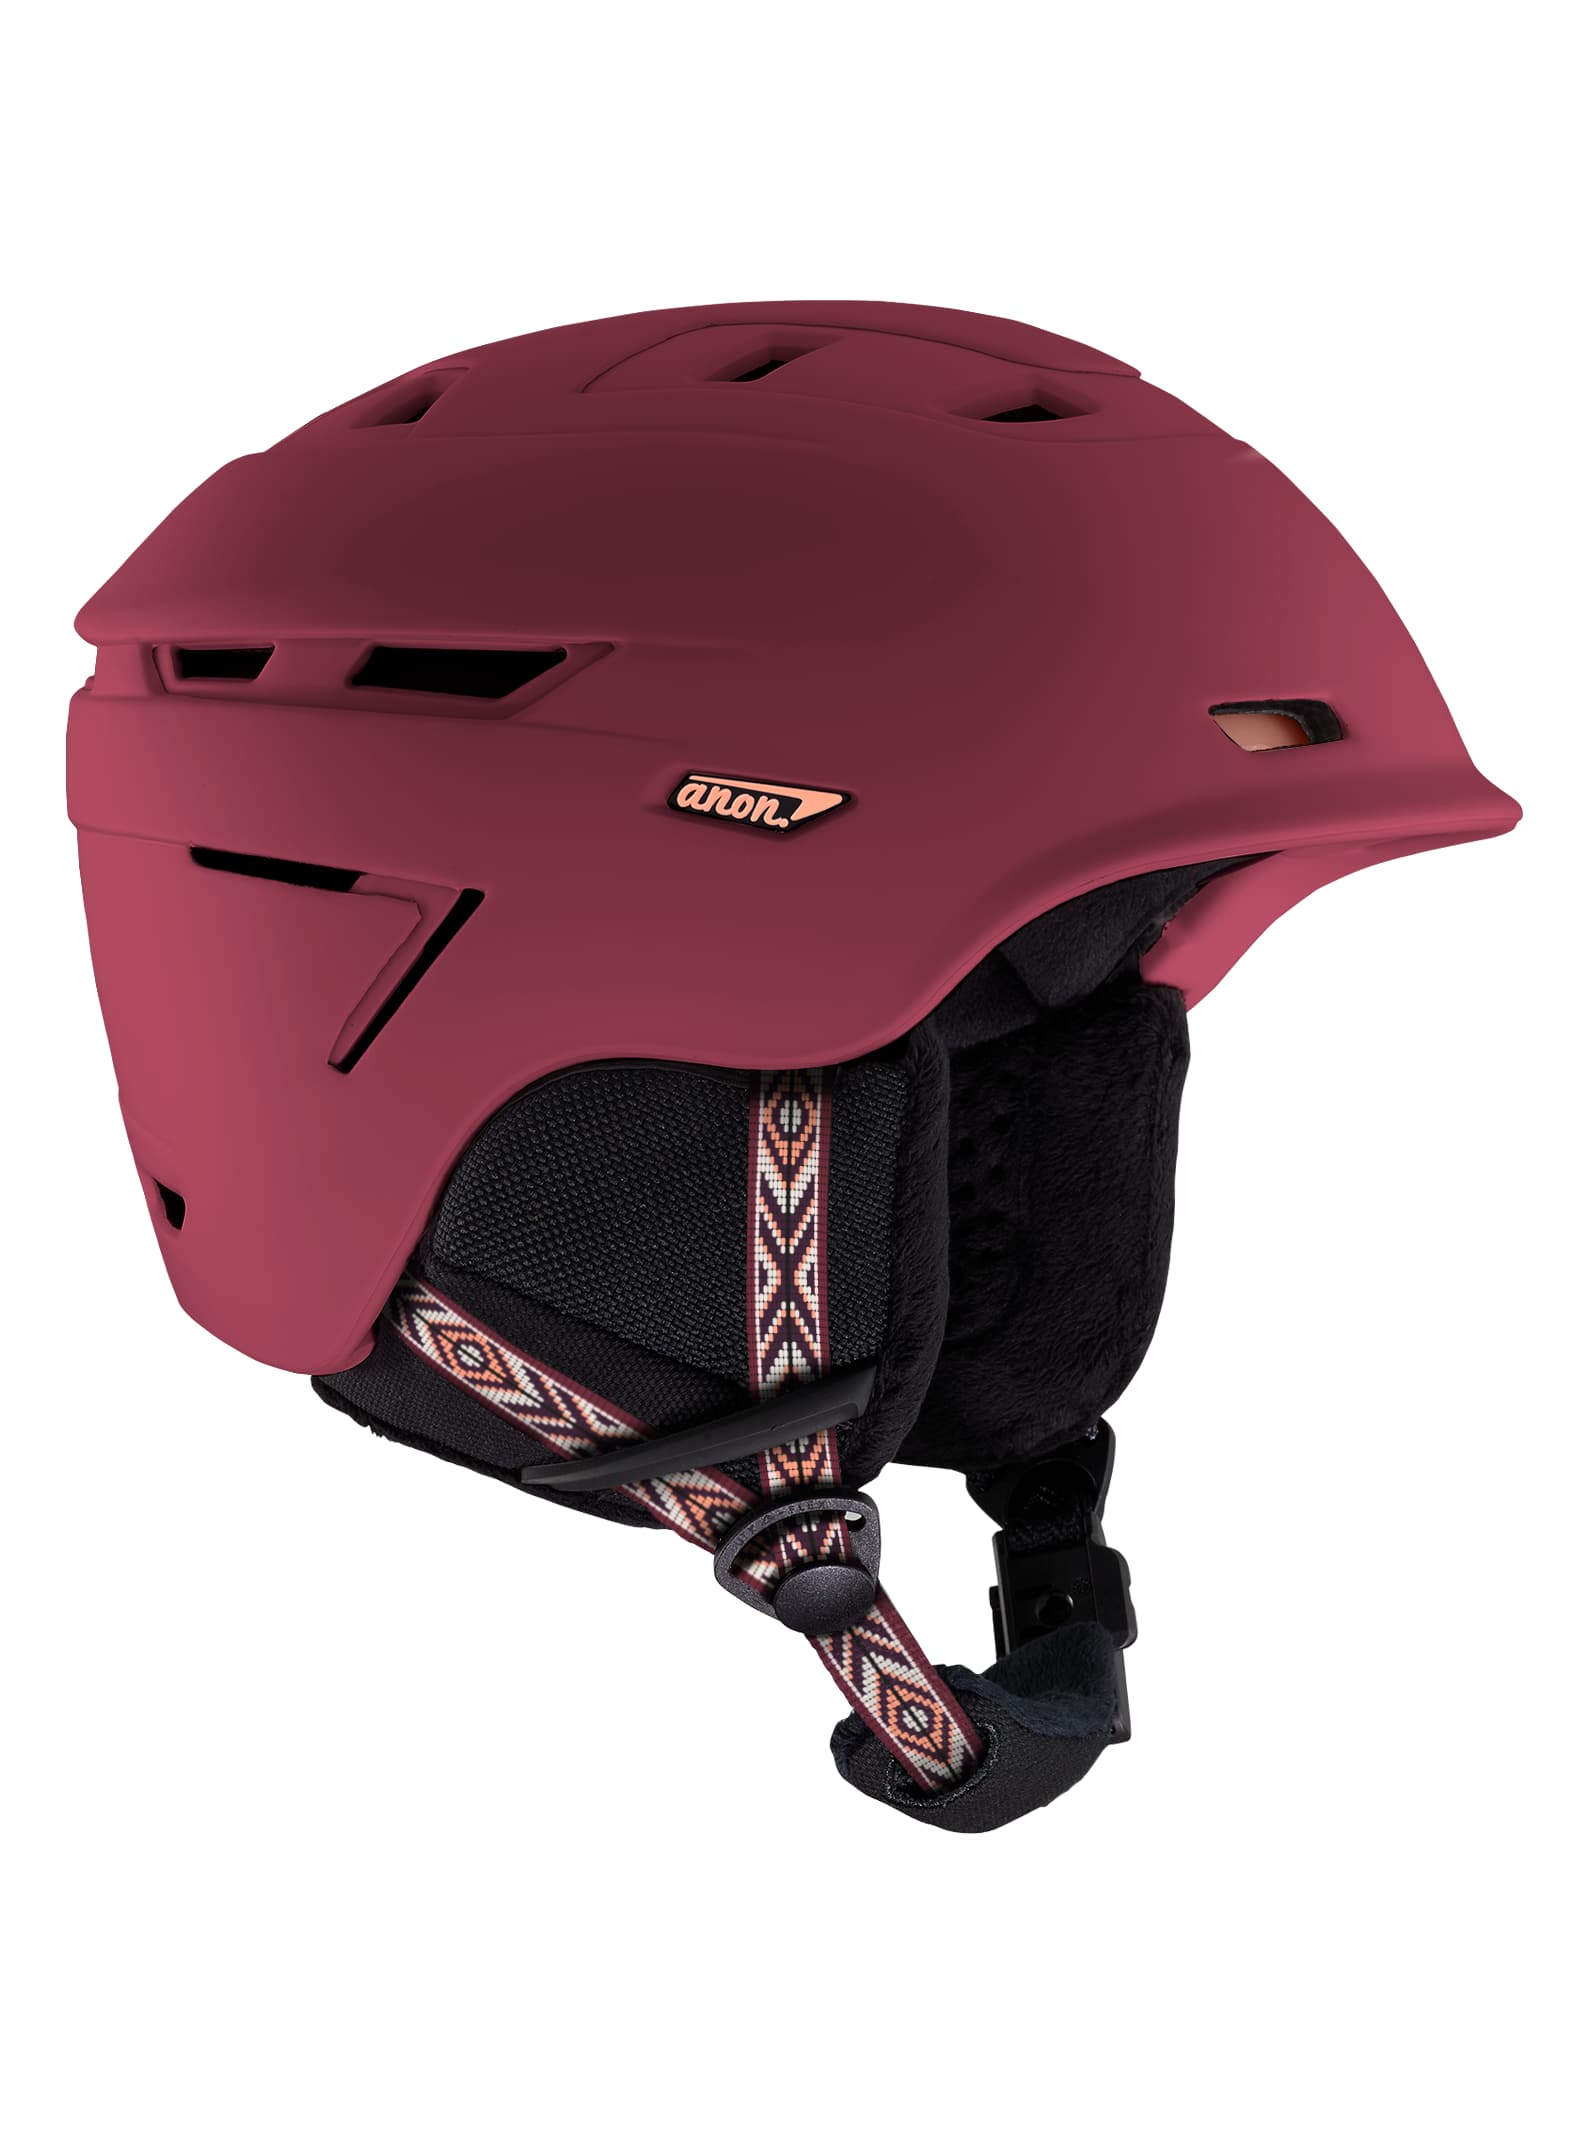 Women's Anon Omega MIPS Helmet | Burton.com Winter 2020 JP